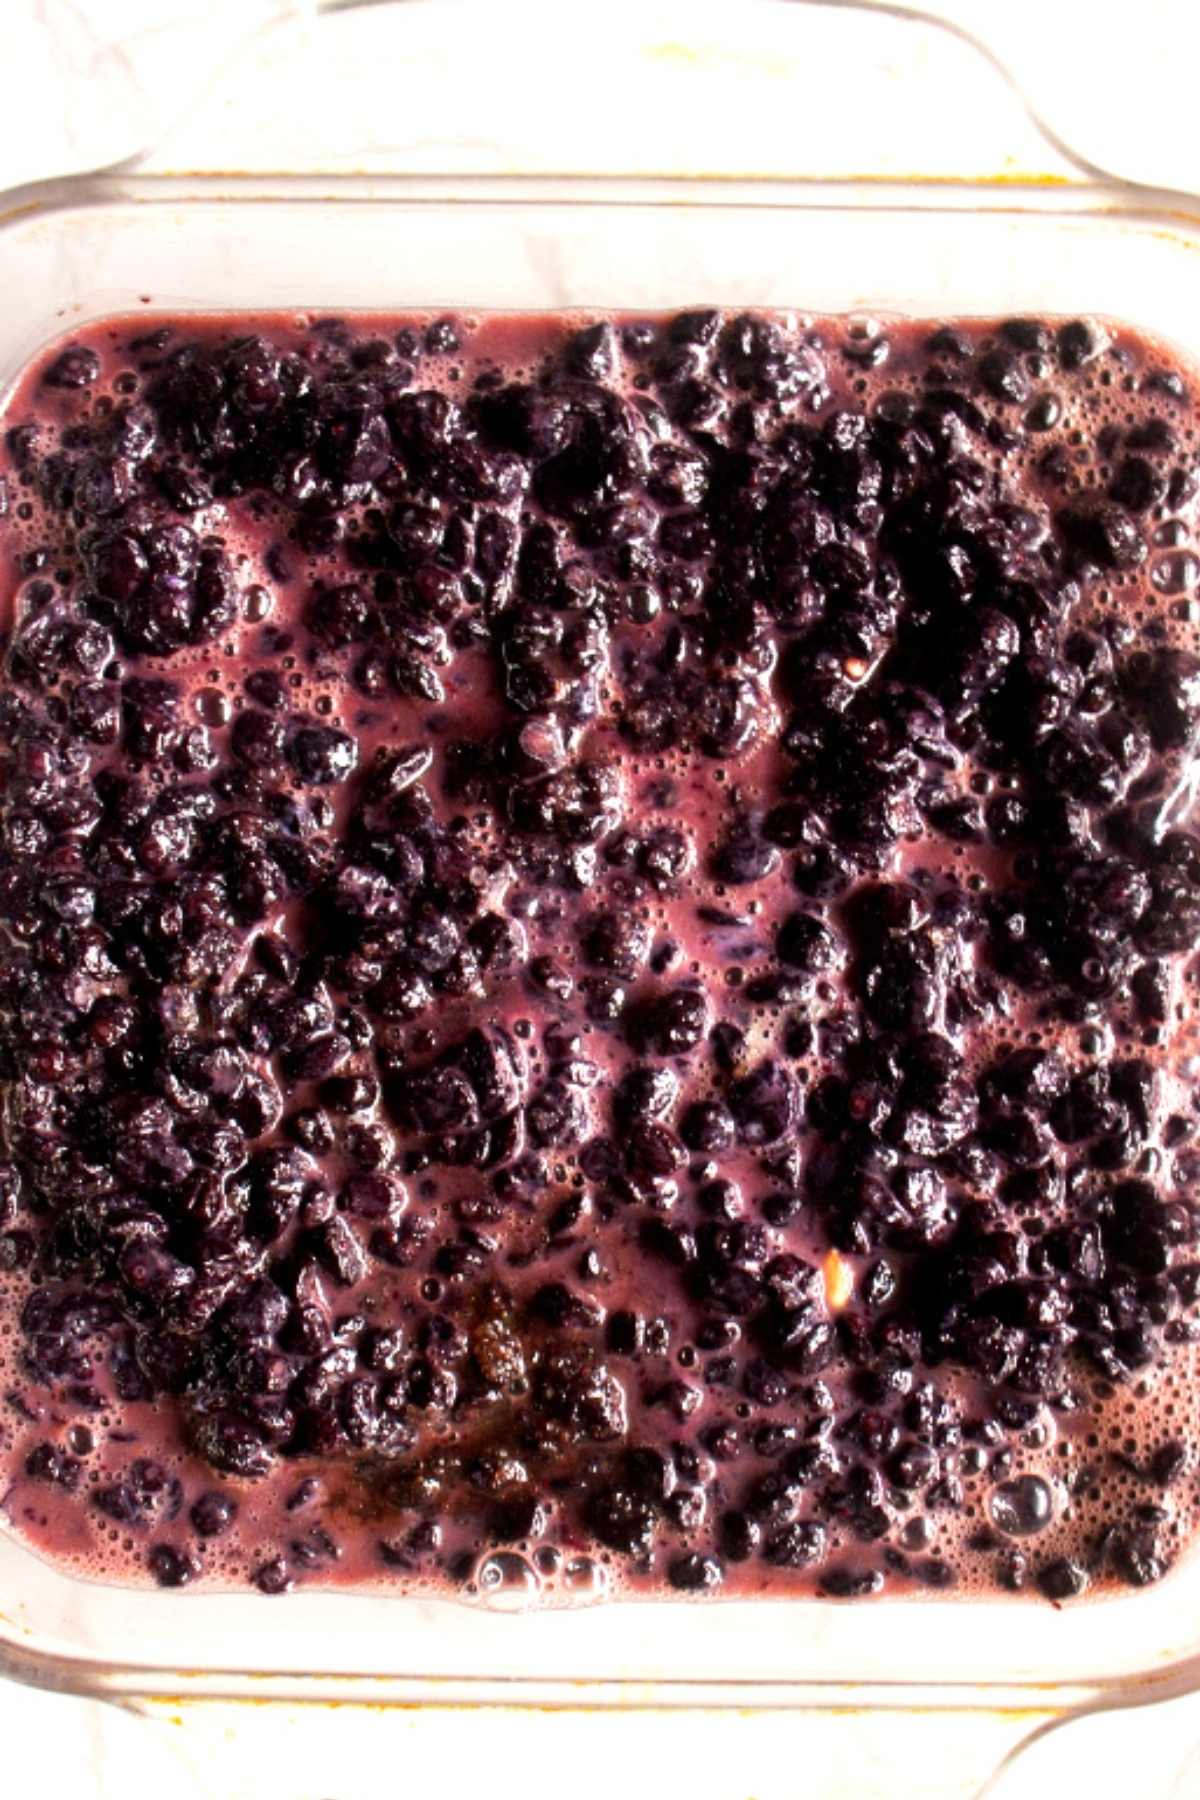 the blueberry custard layer